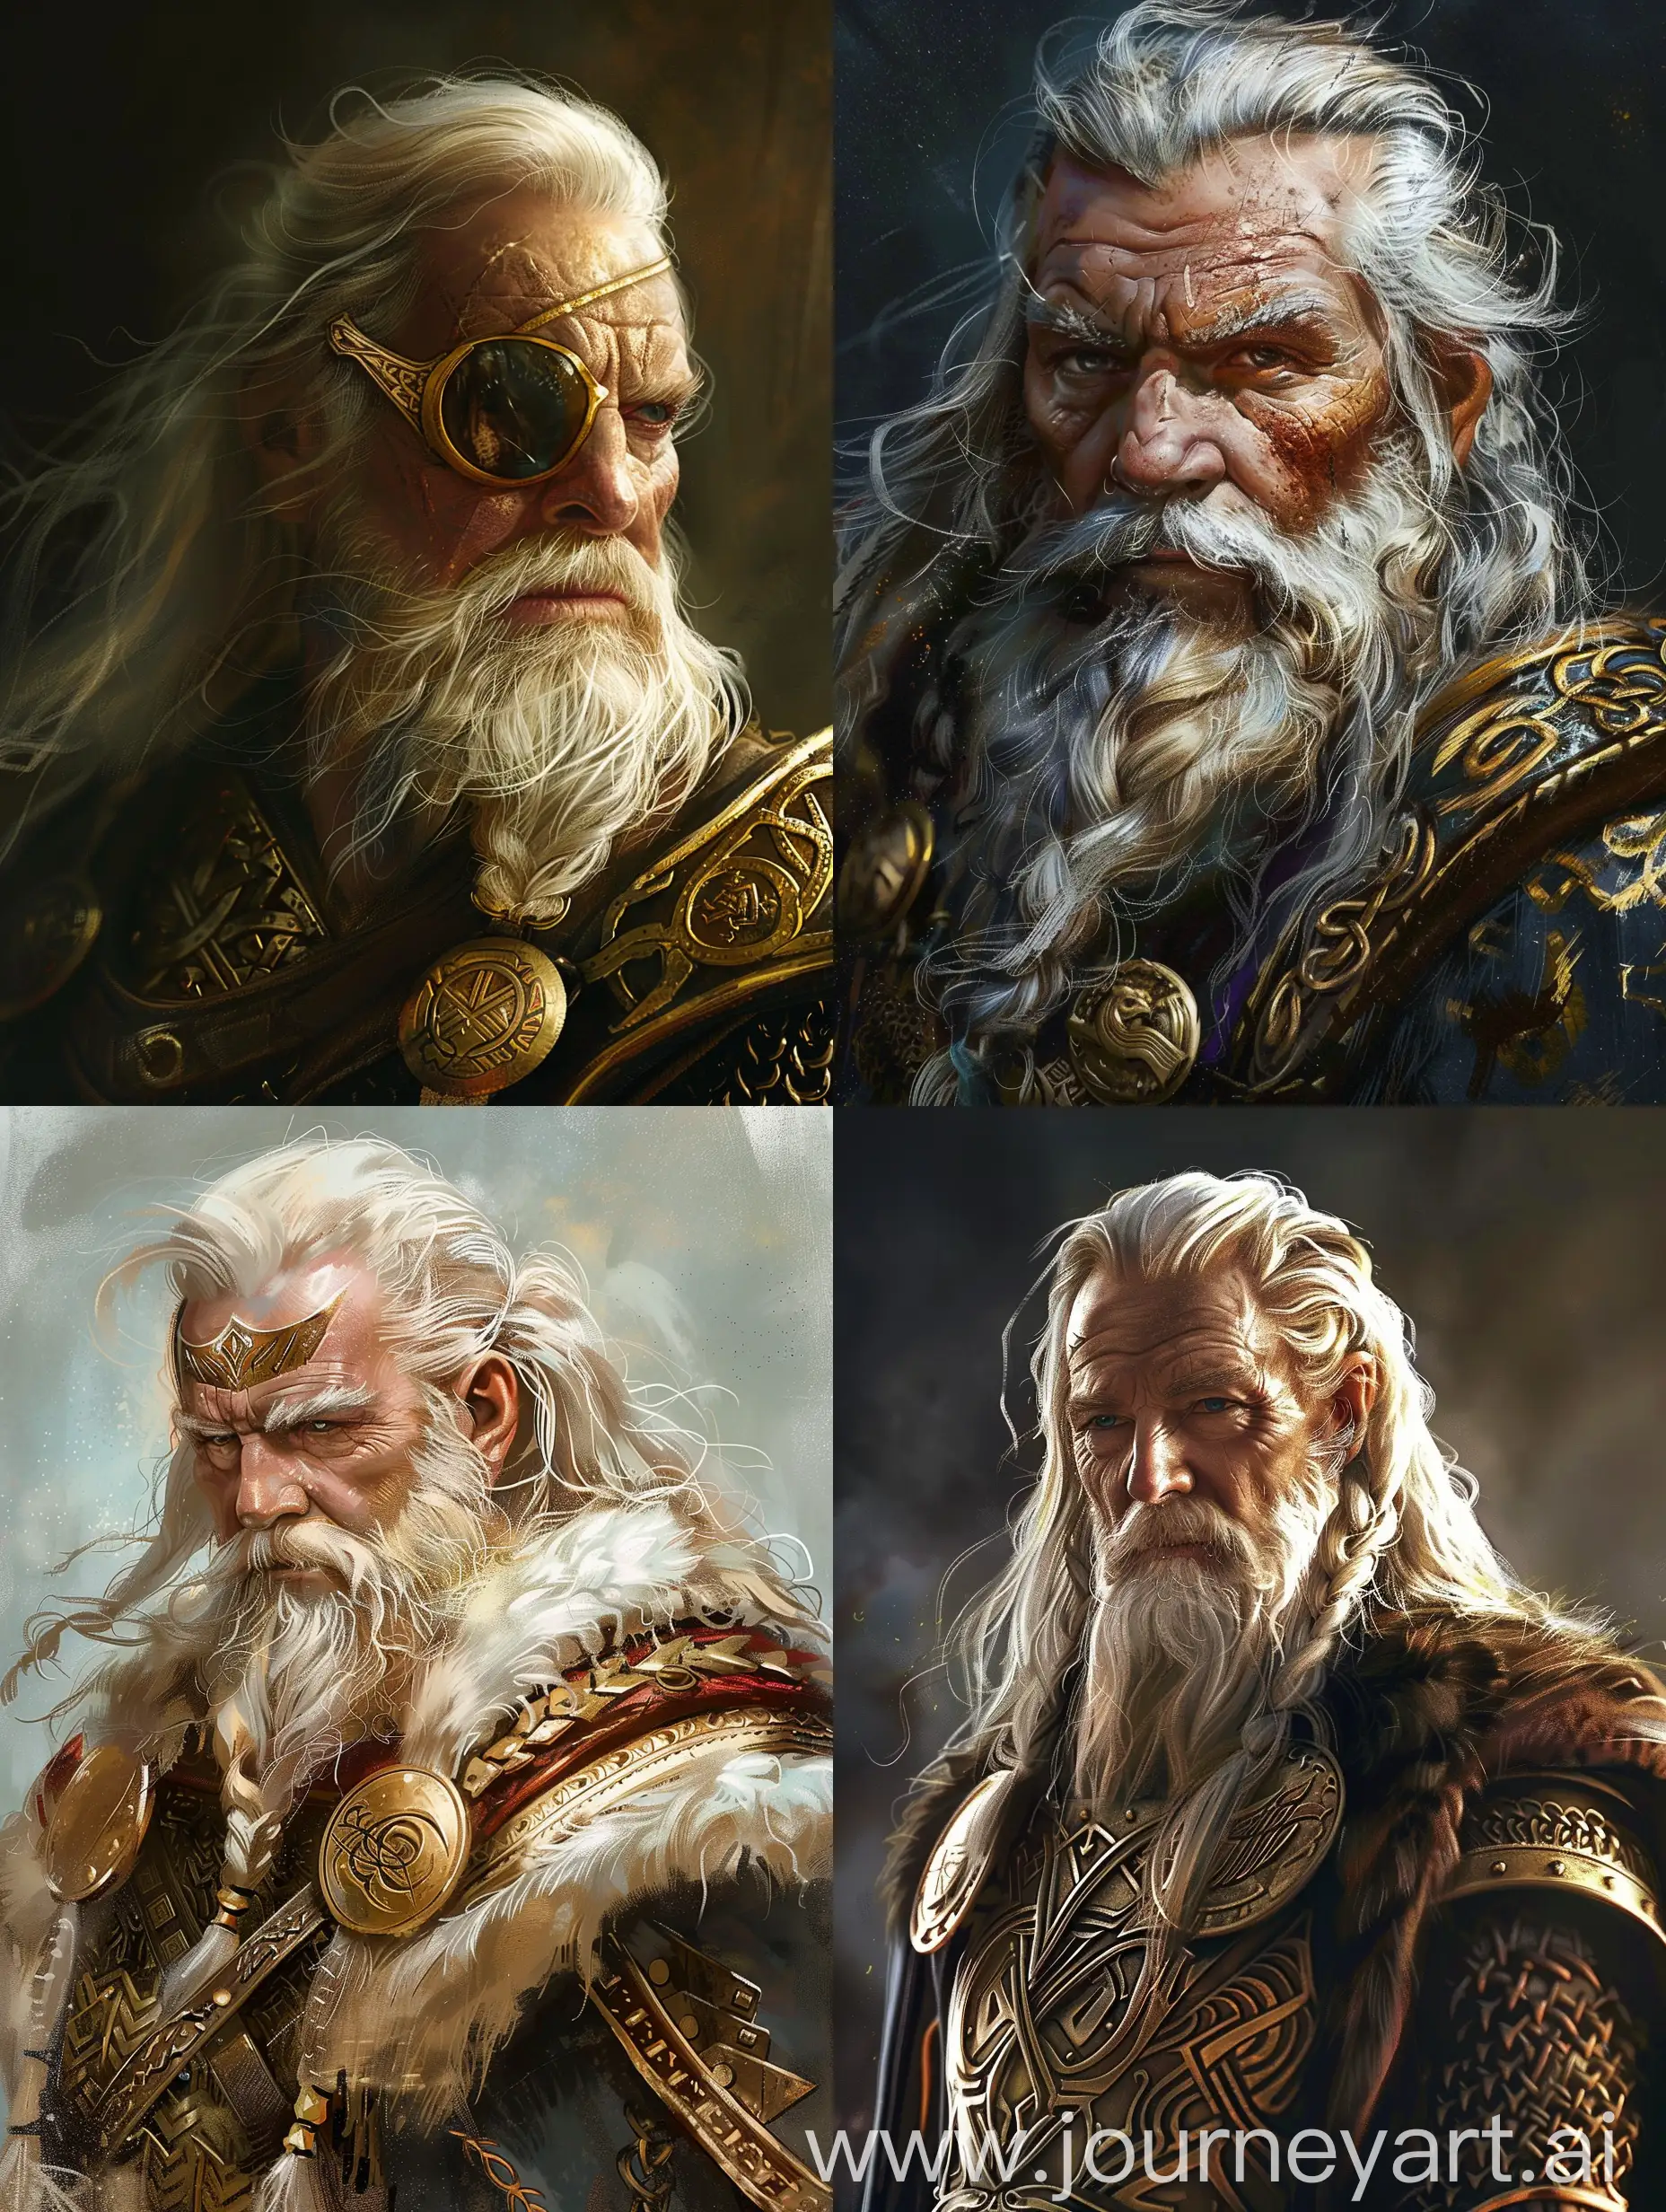 Realistic-Portrait-of-the-God-Odin-with-Norse-Mythology-Vibe